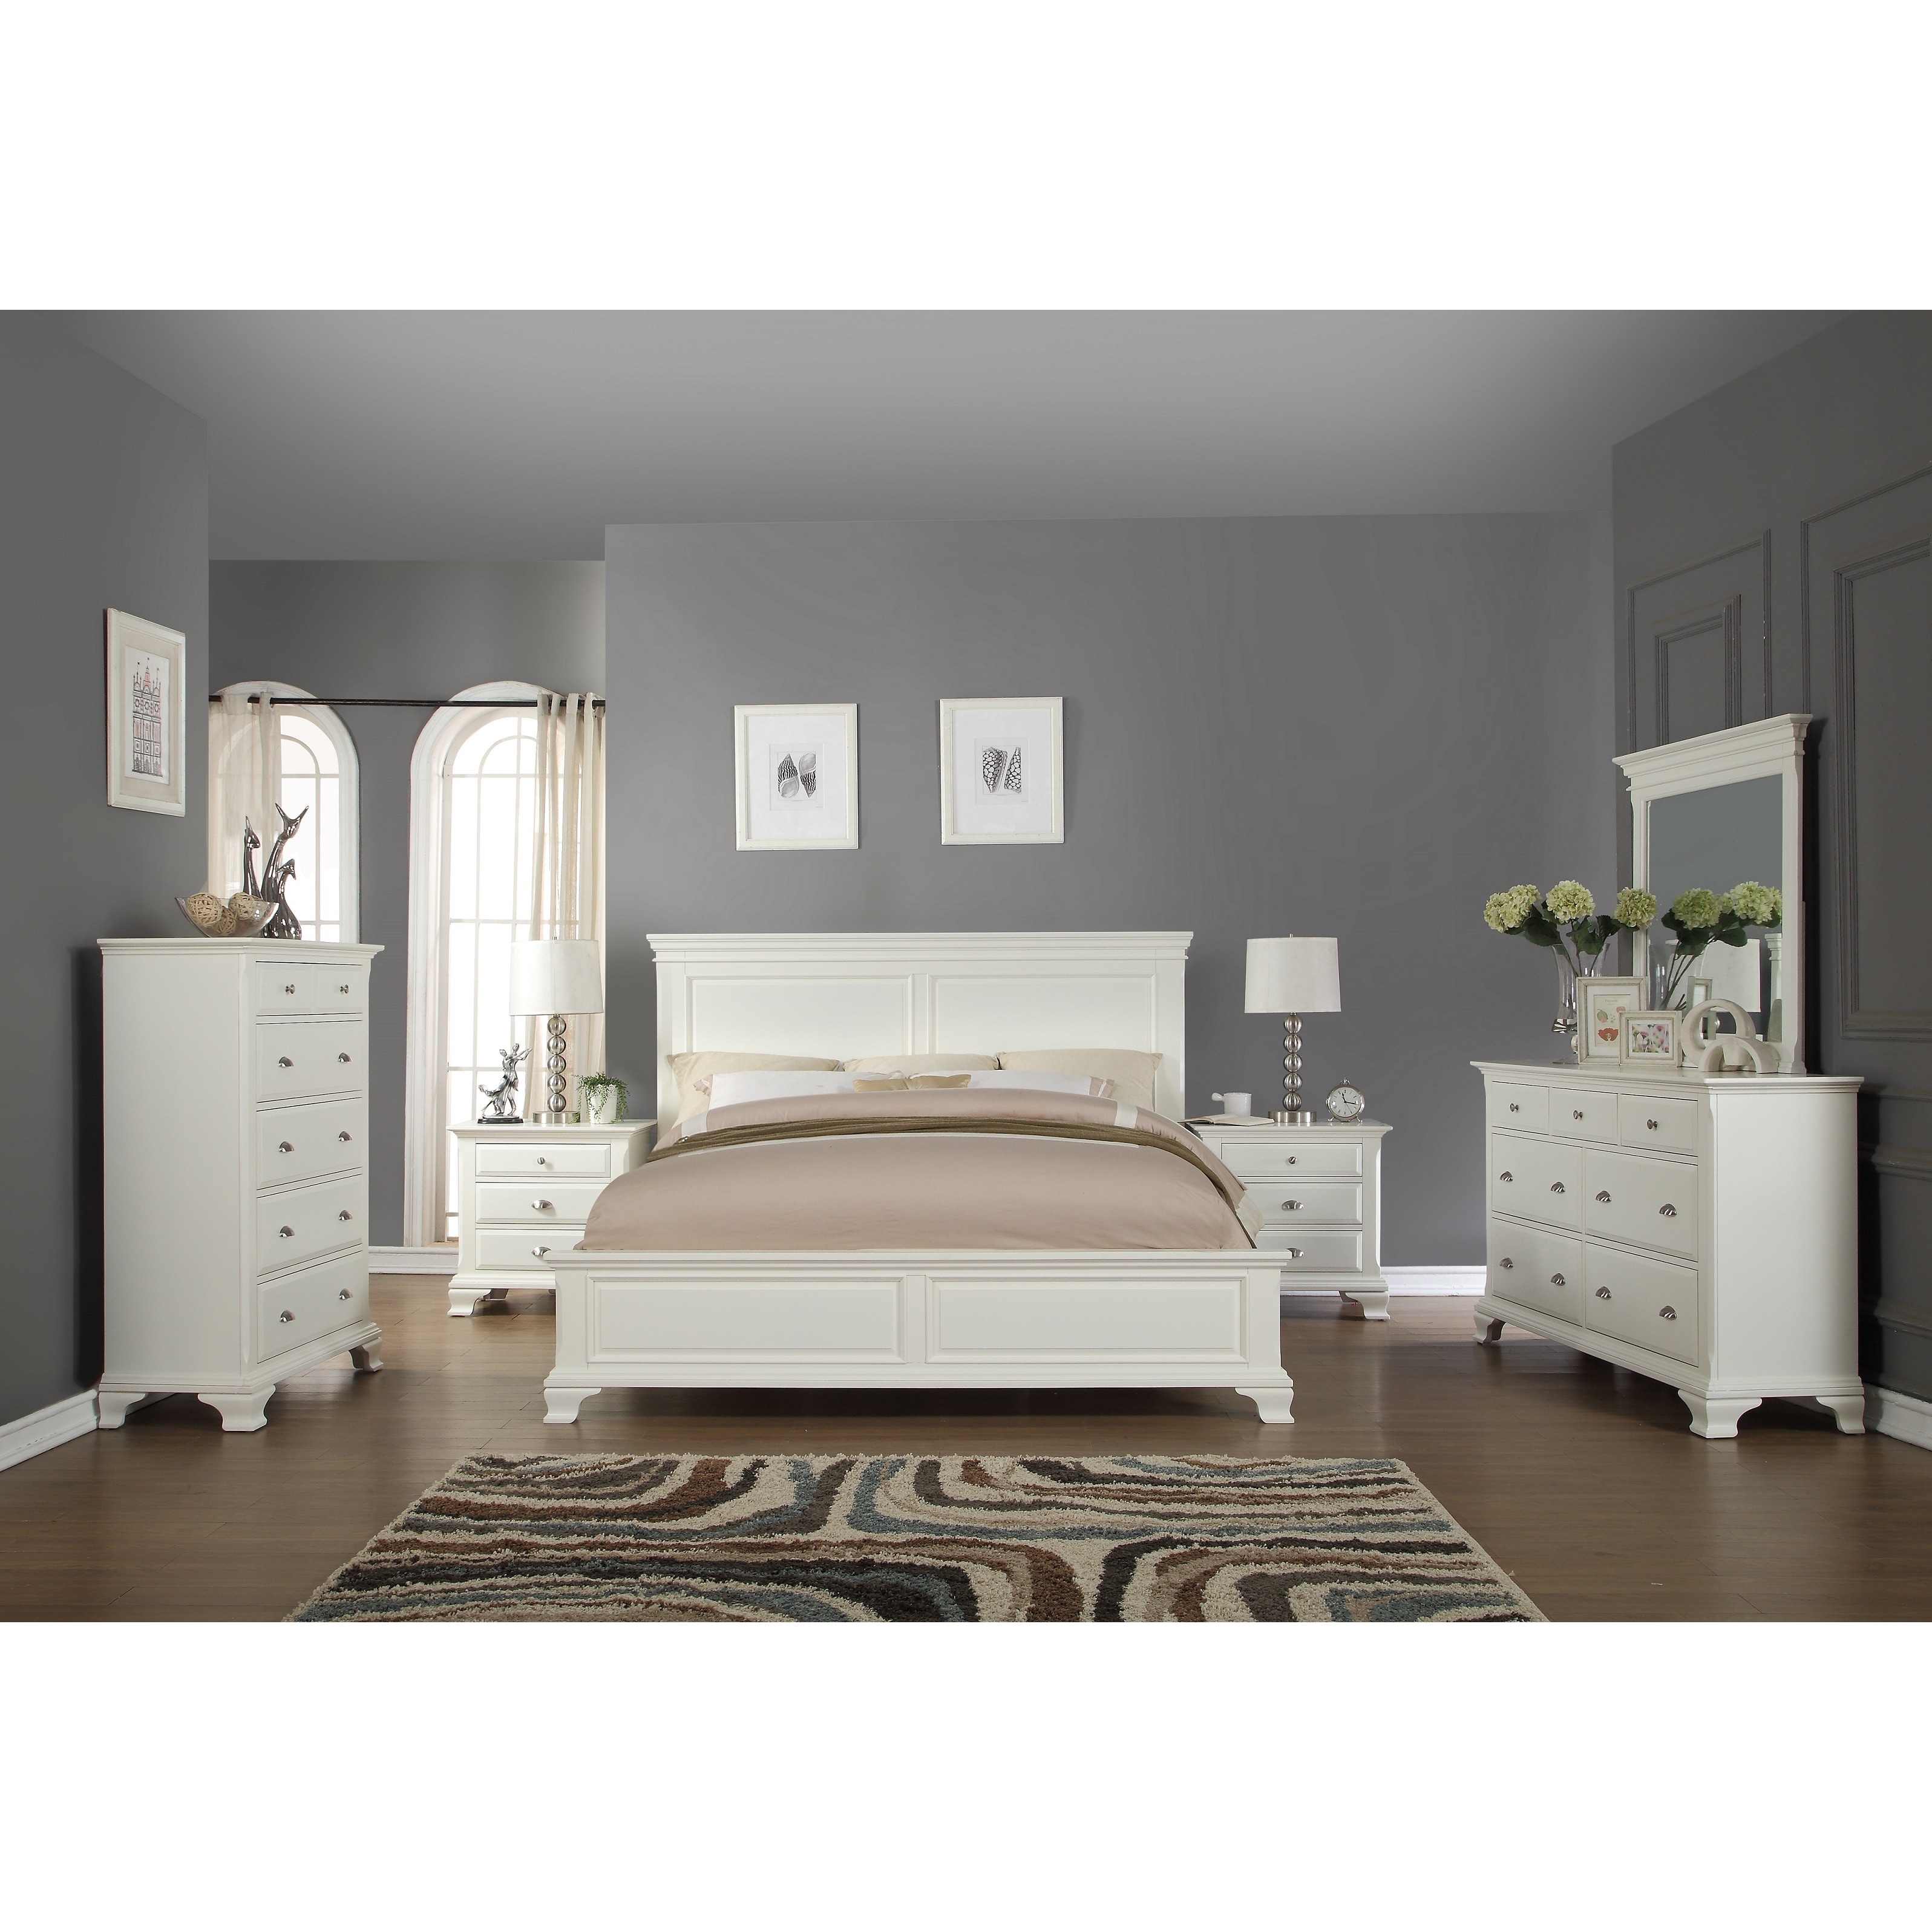 Laveno White Wood King 6 Piece Bedroom Furniture Set On Sale Overstock 12064541